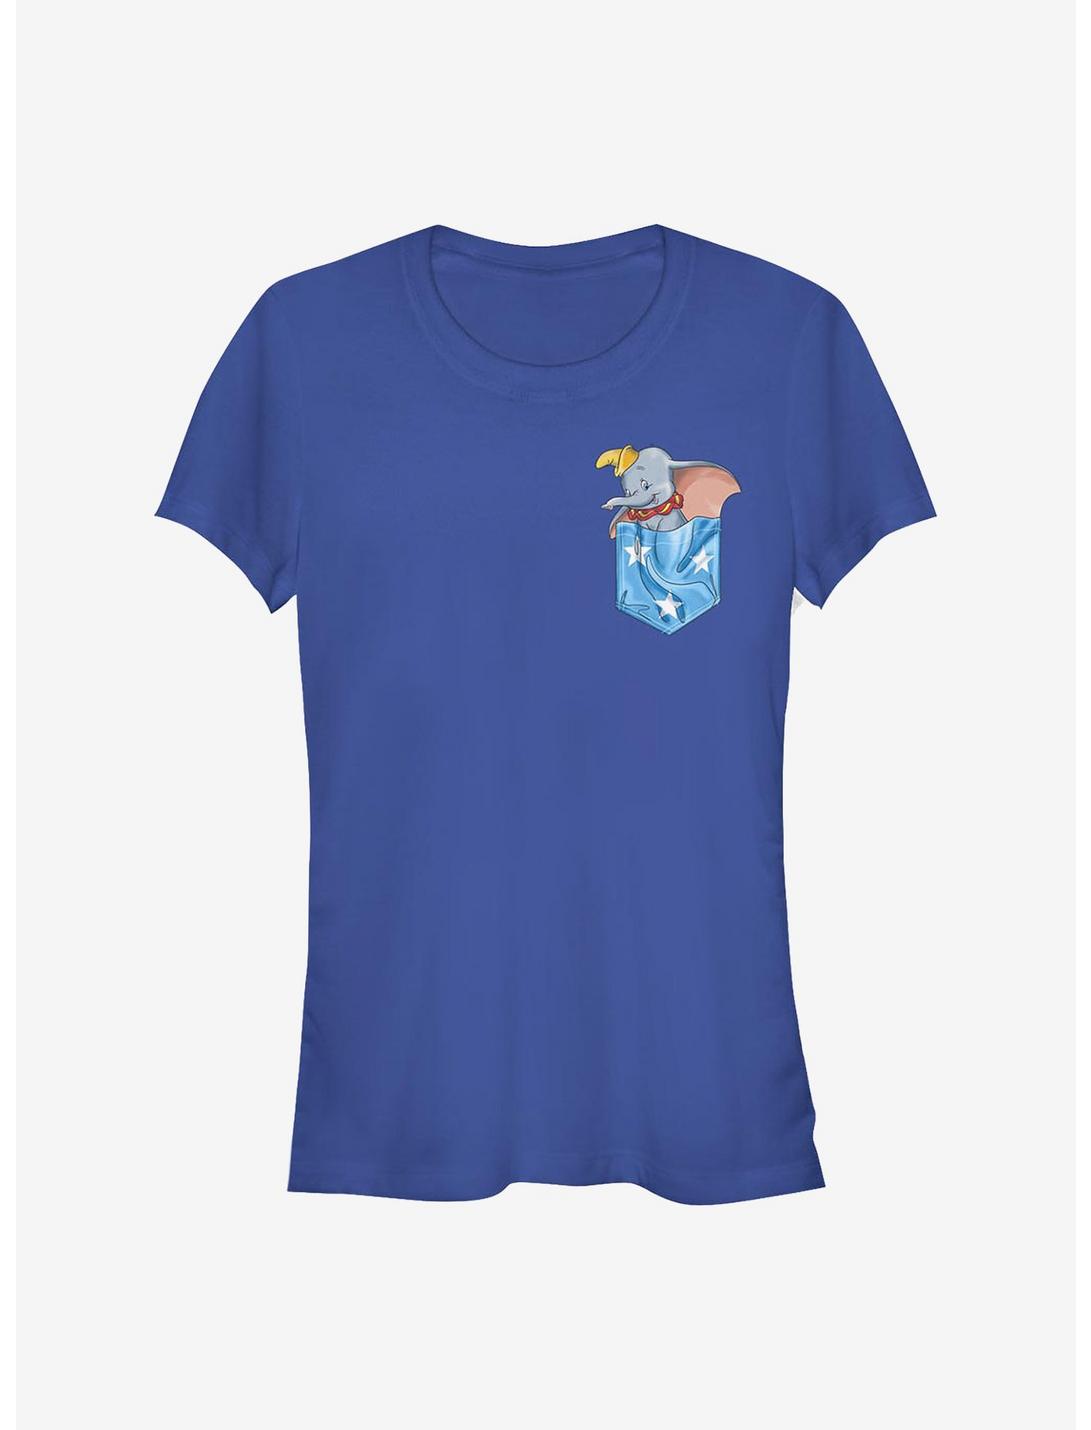 Disney Dumbo Faux Pocket Girls T-Shirt, ROYAL, hi-res